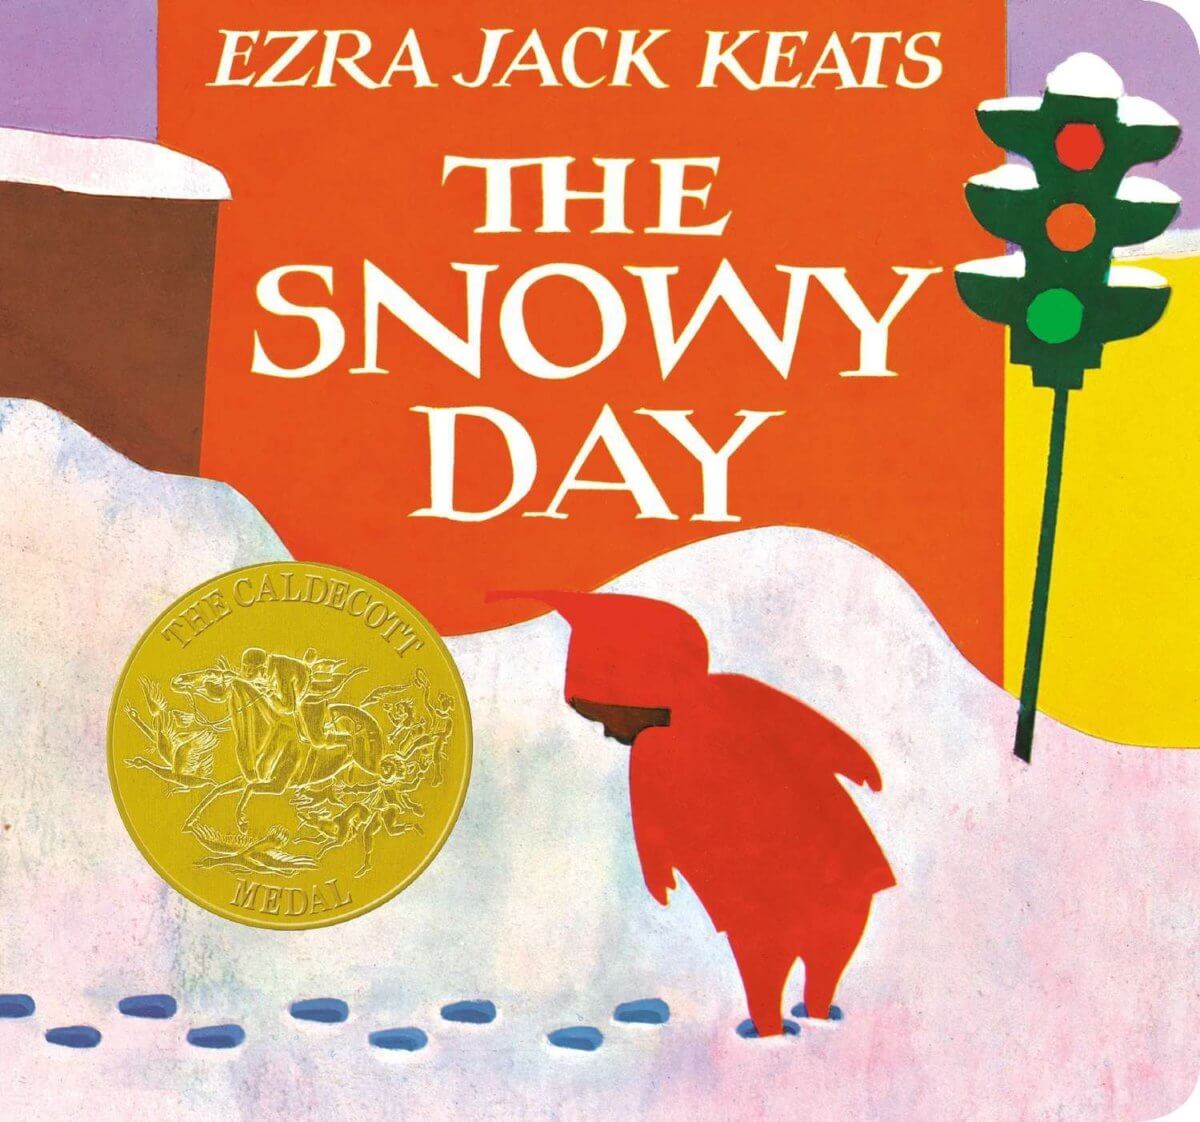 A Snowy Day by Ezra Jack Keats